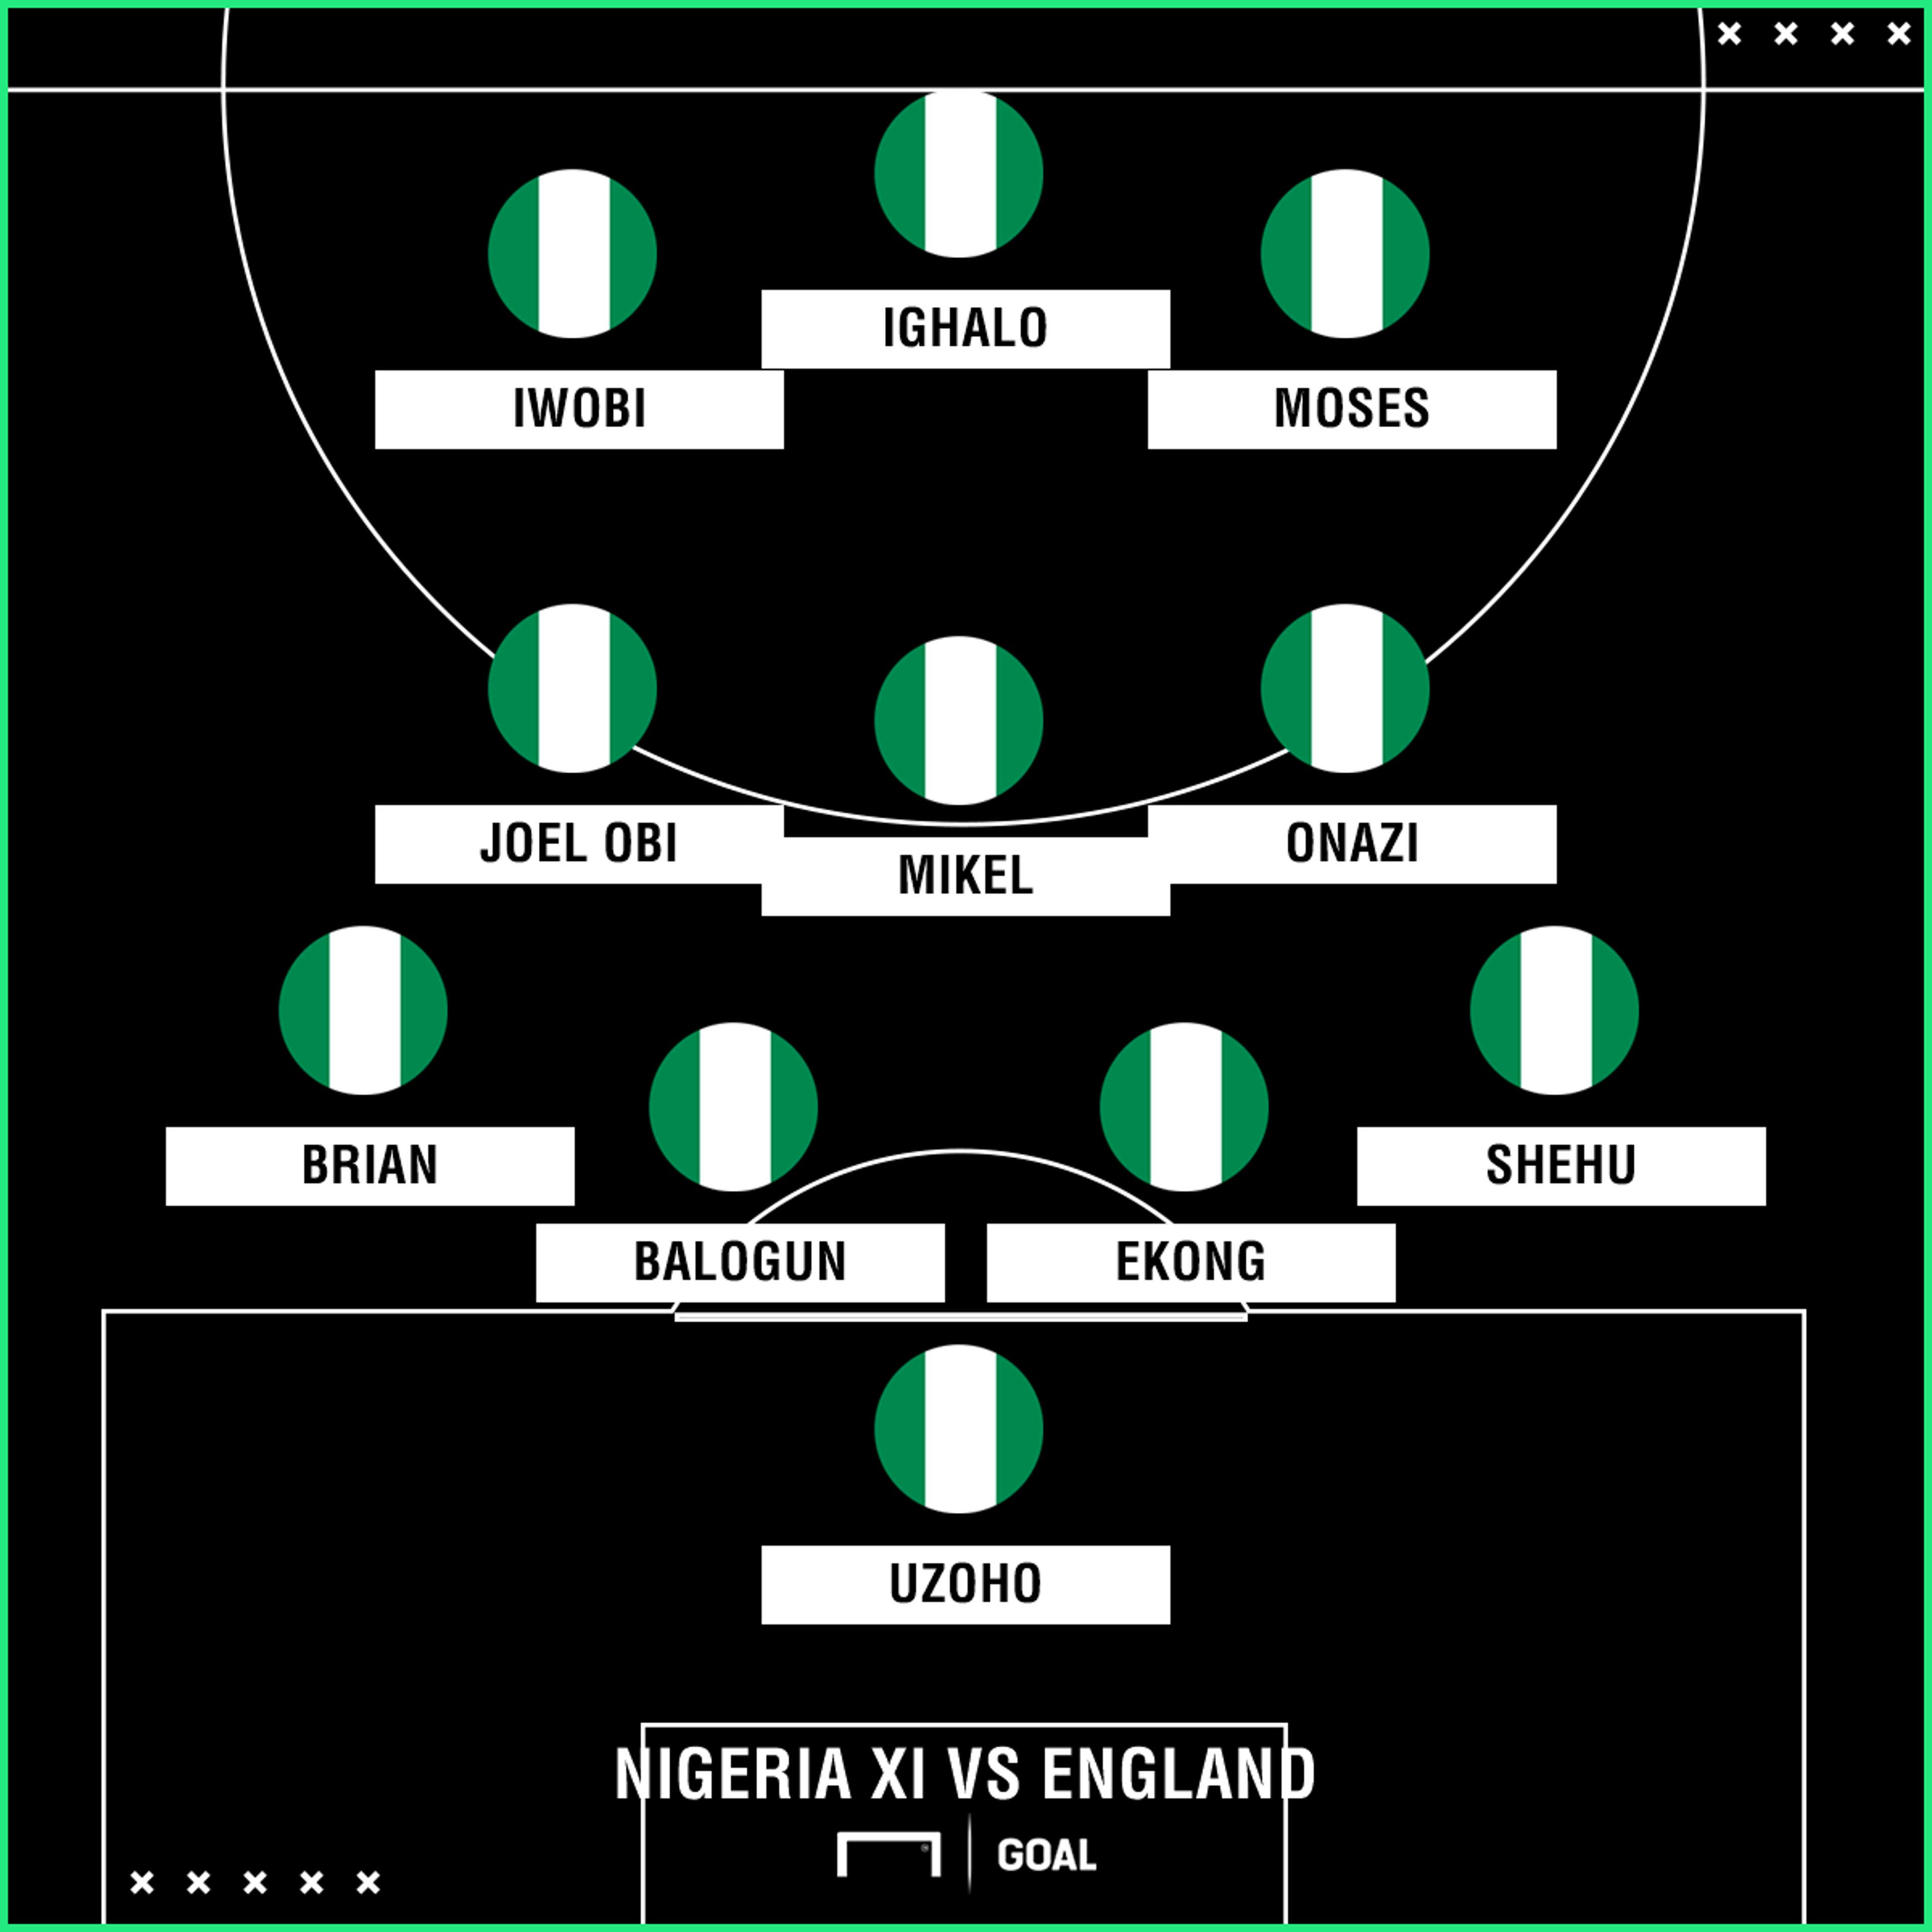 Nigeria XI vs England